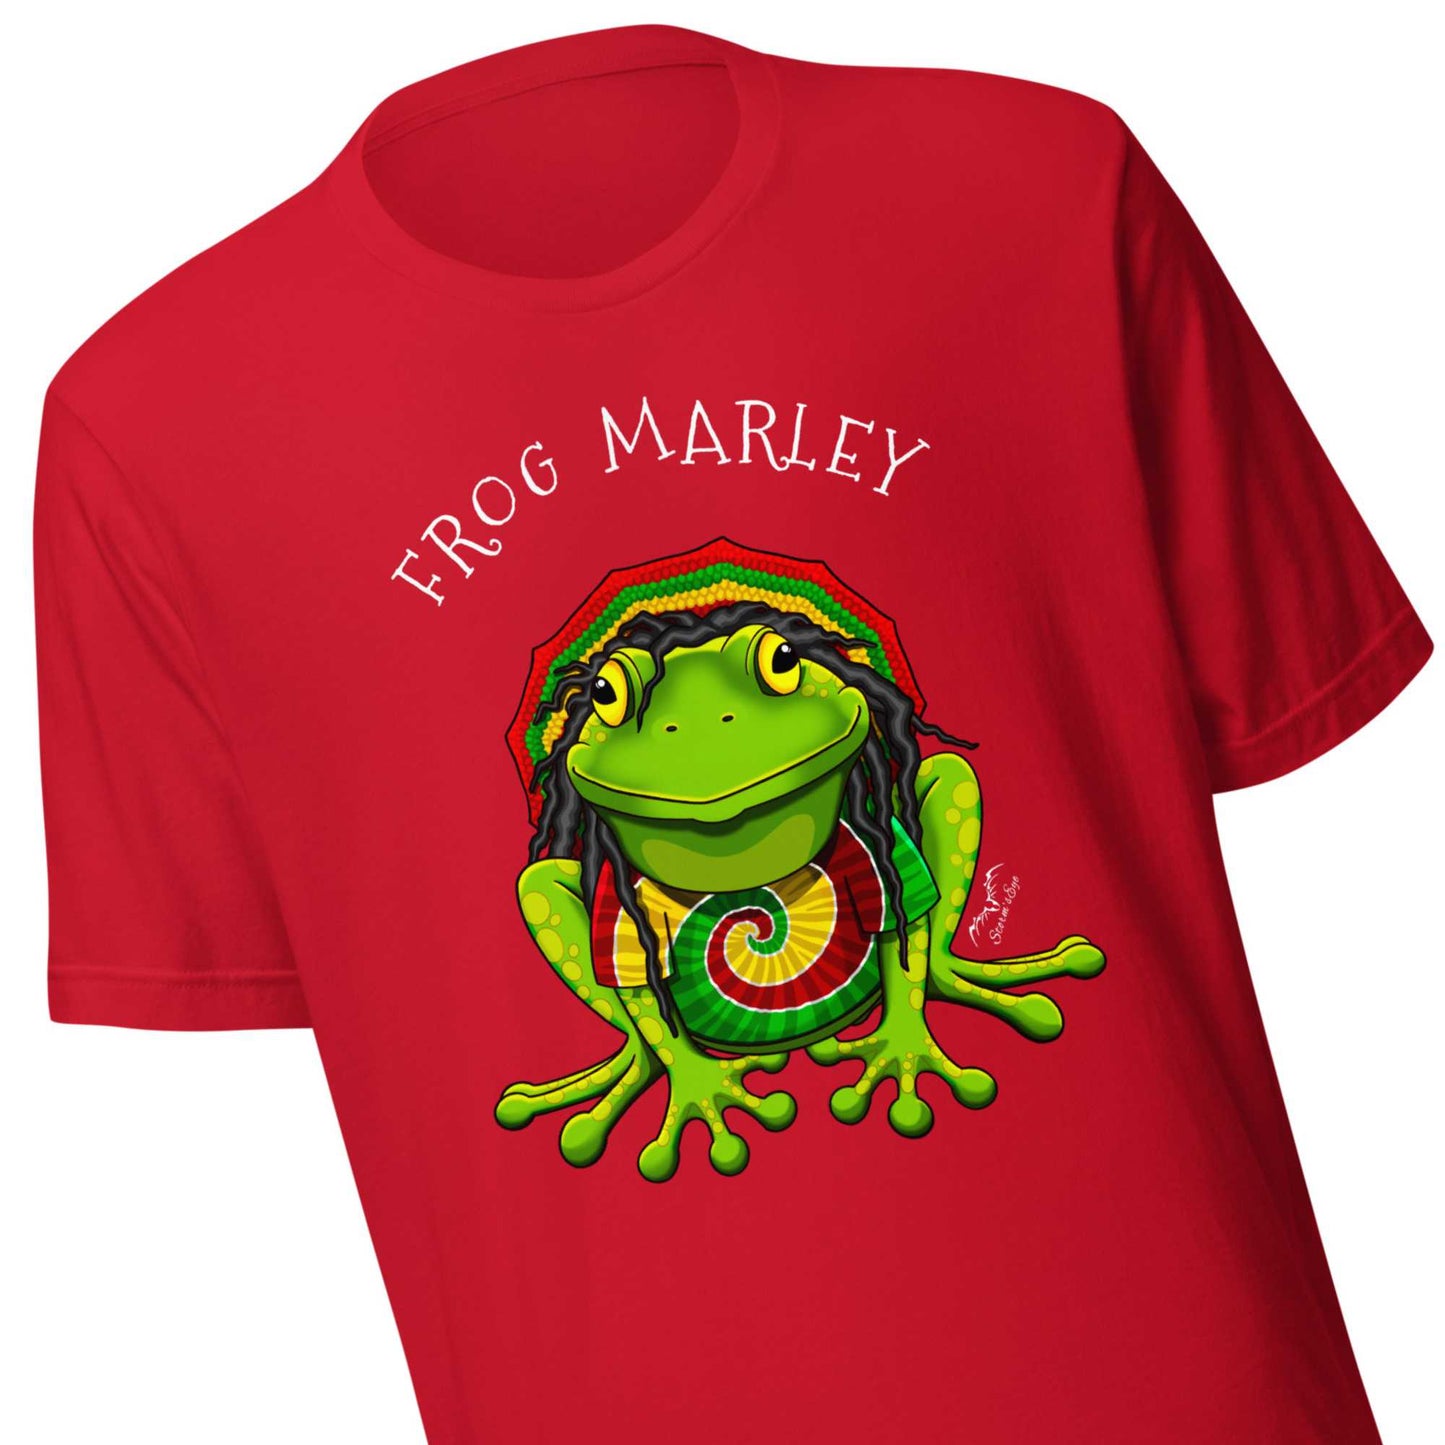 stormseye design frog marley reggae T shirt, detail view bright red